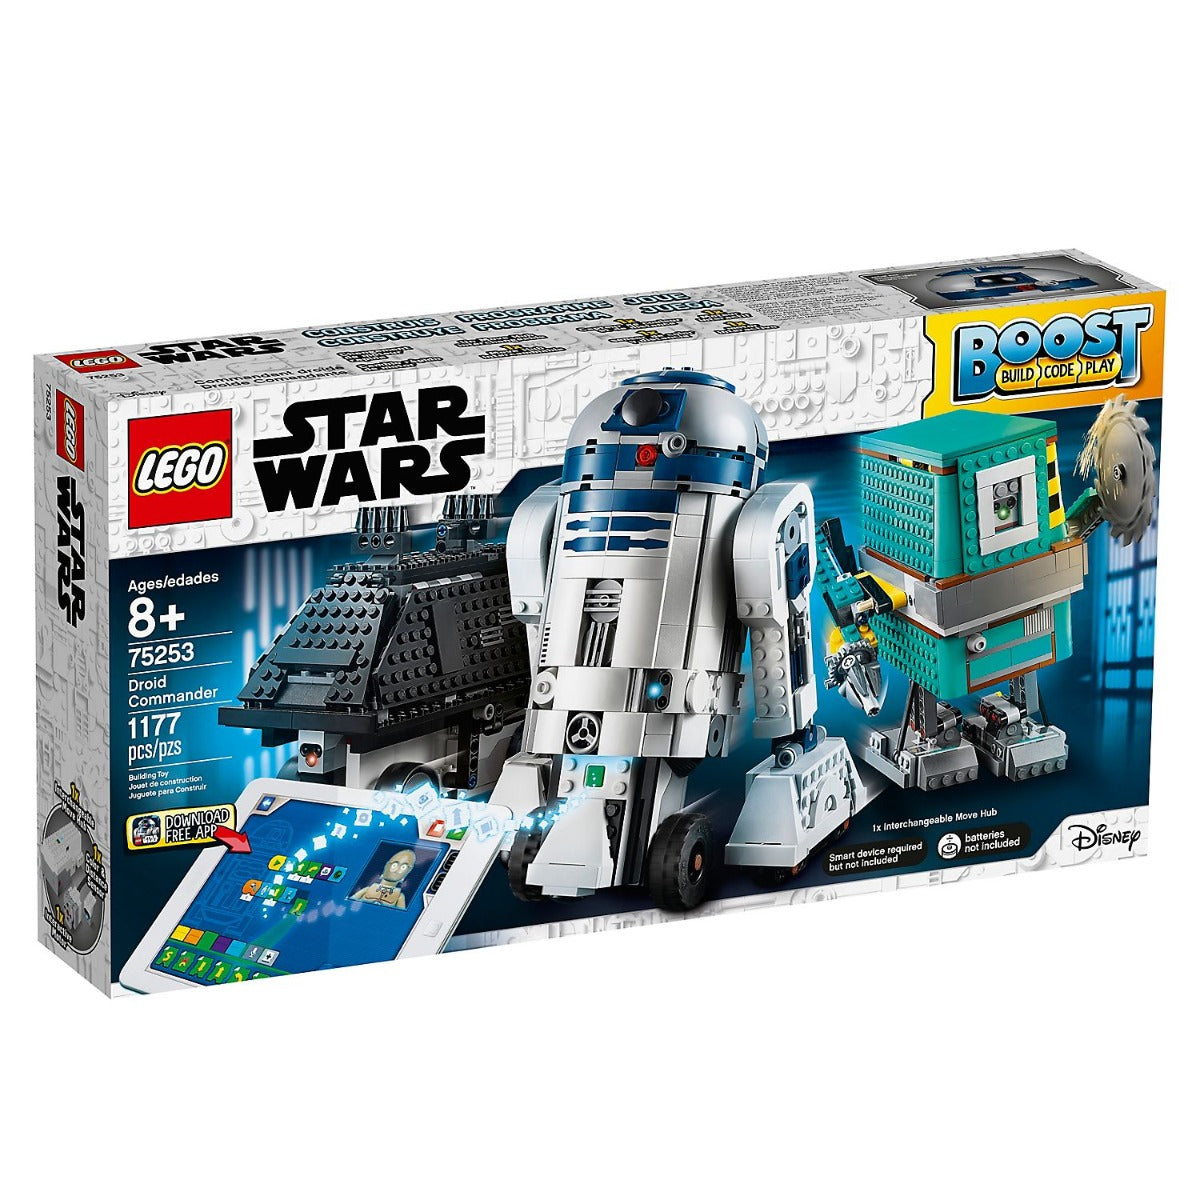 Lego Star Wars Droid Commander 75253